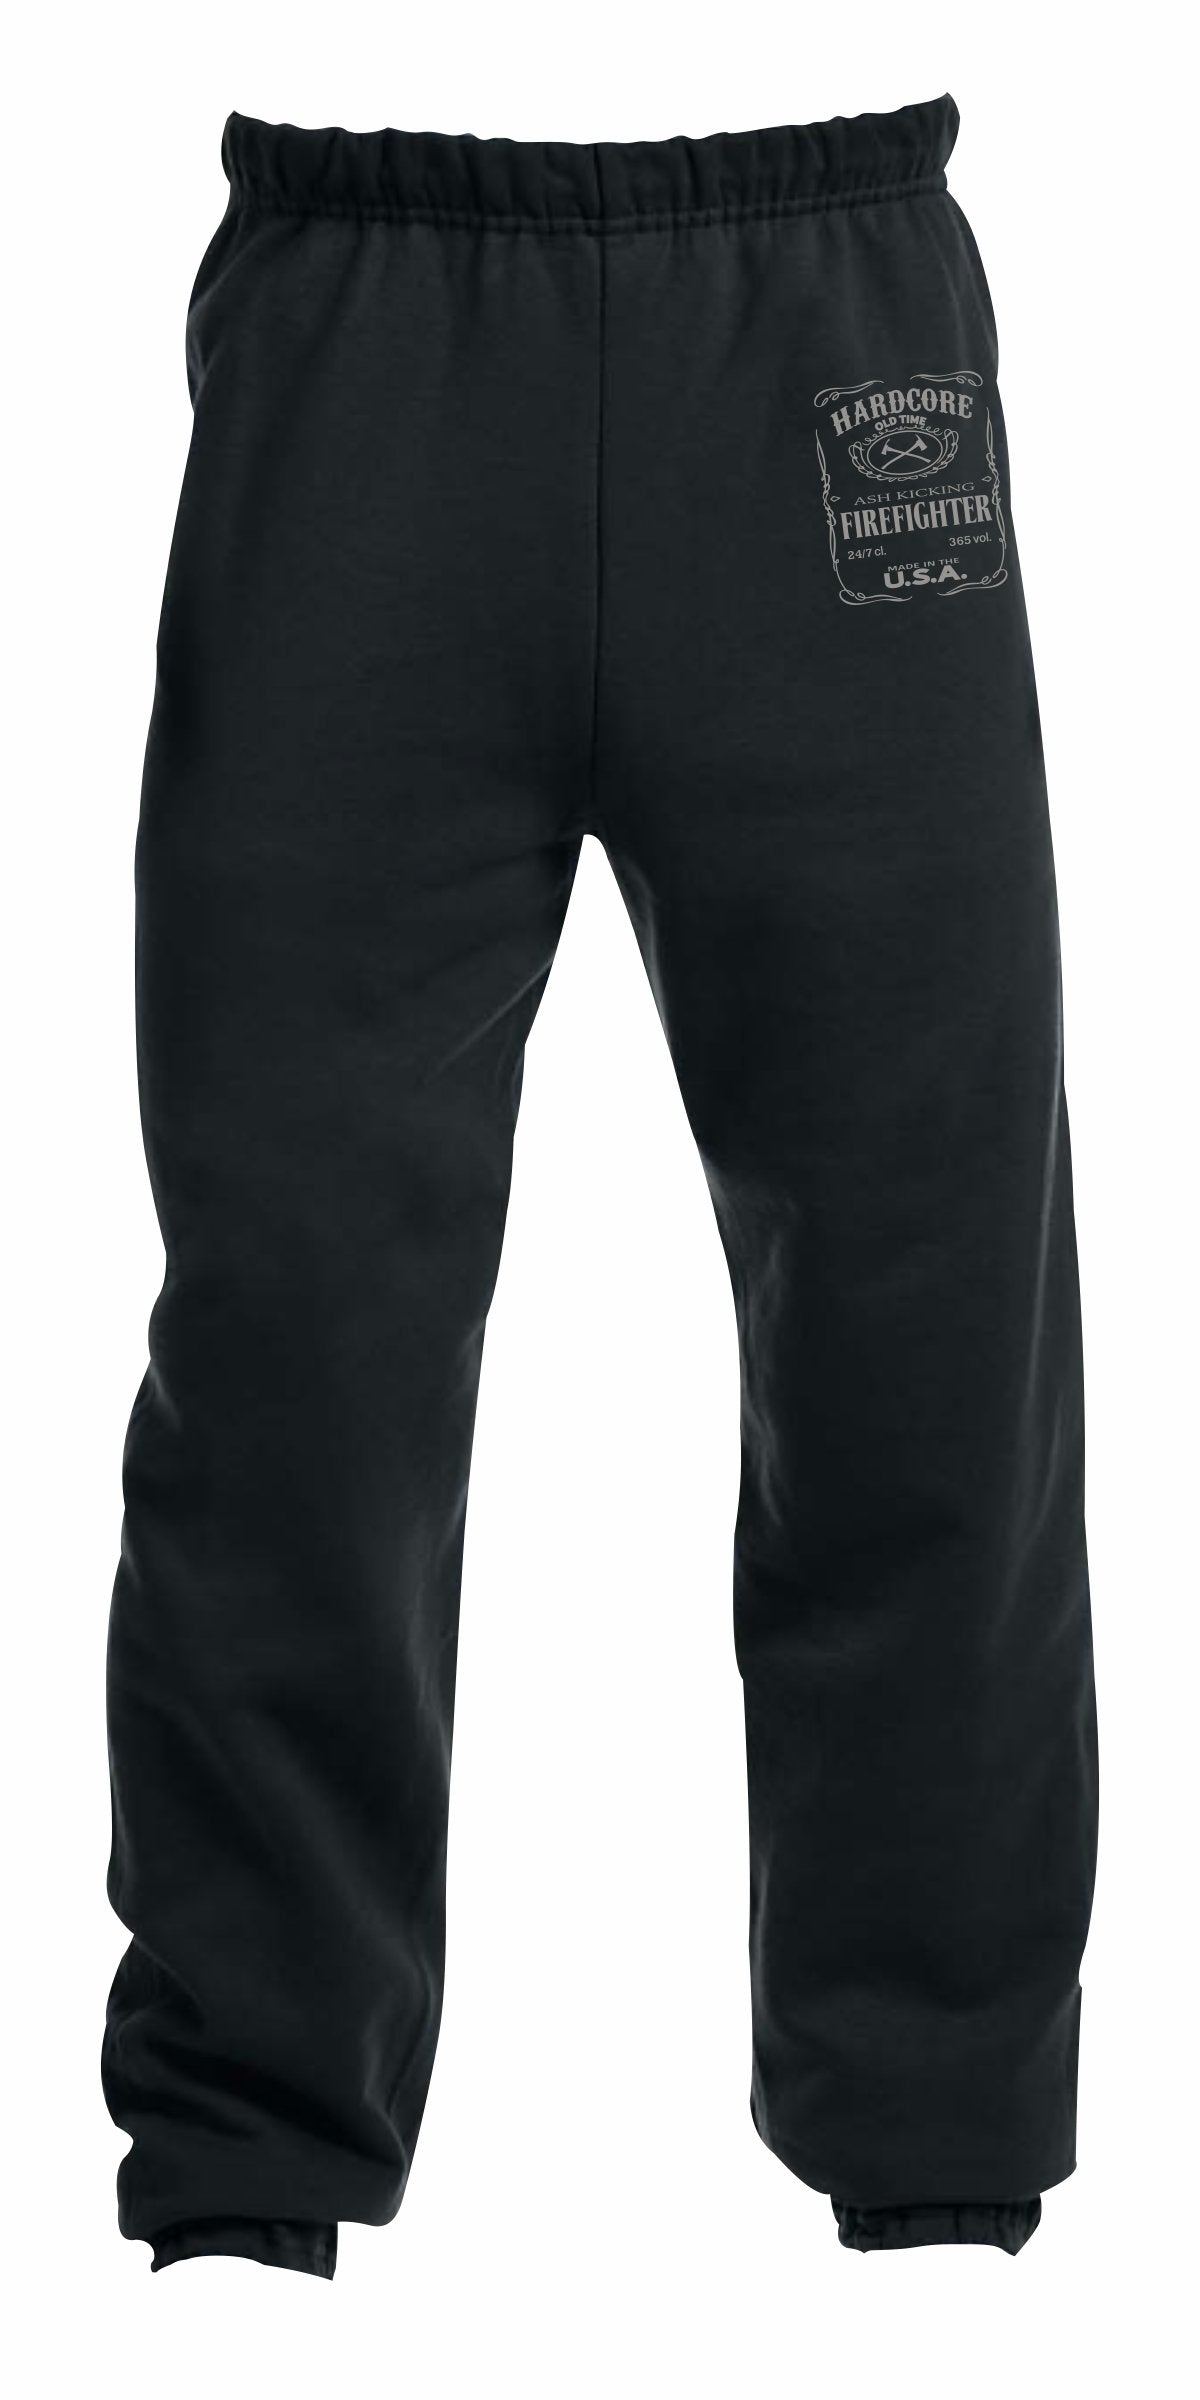 Hardcore Firefighter Sweatpants 